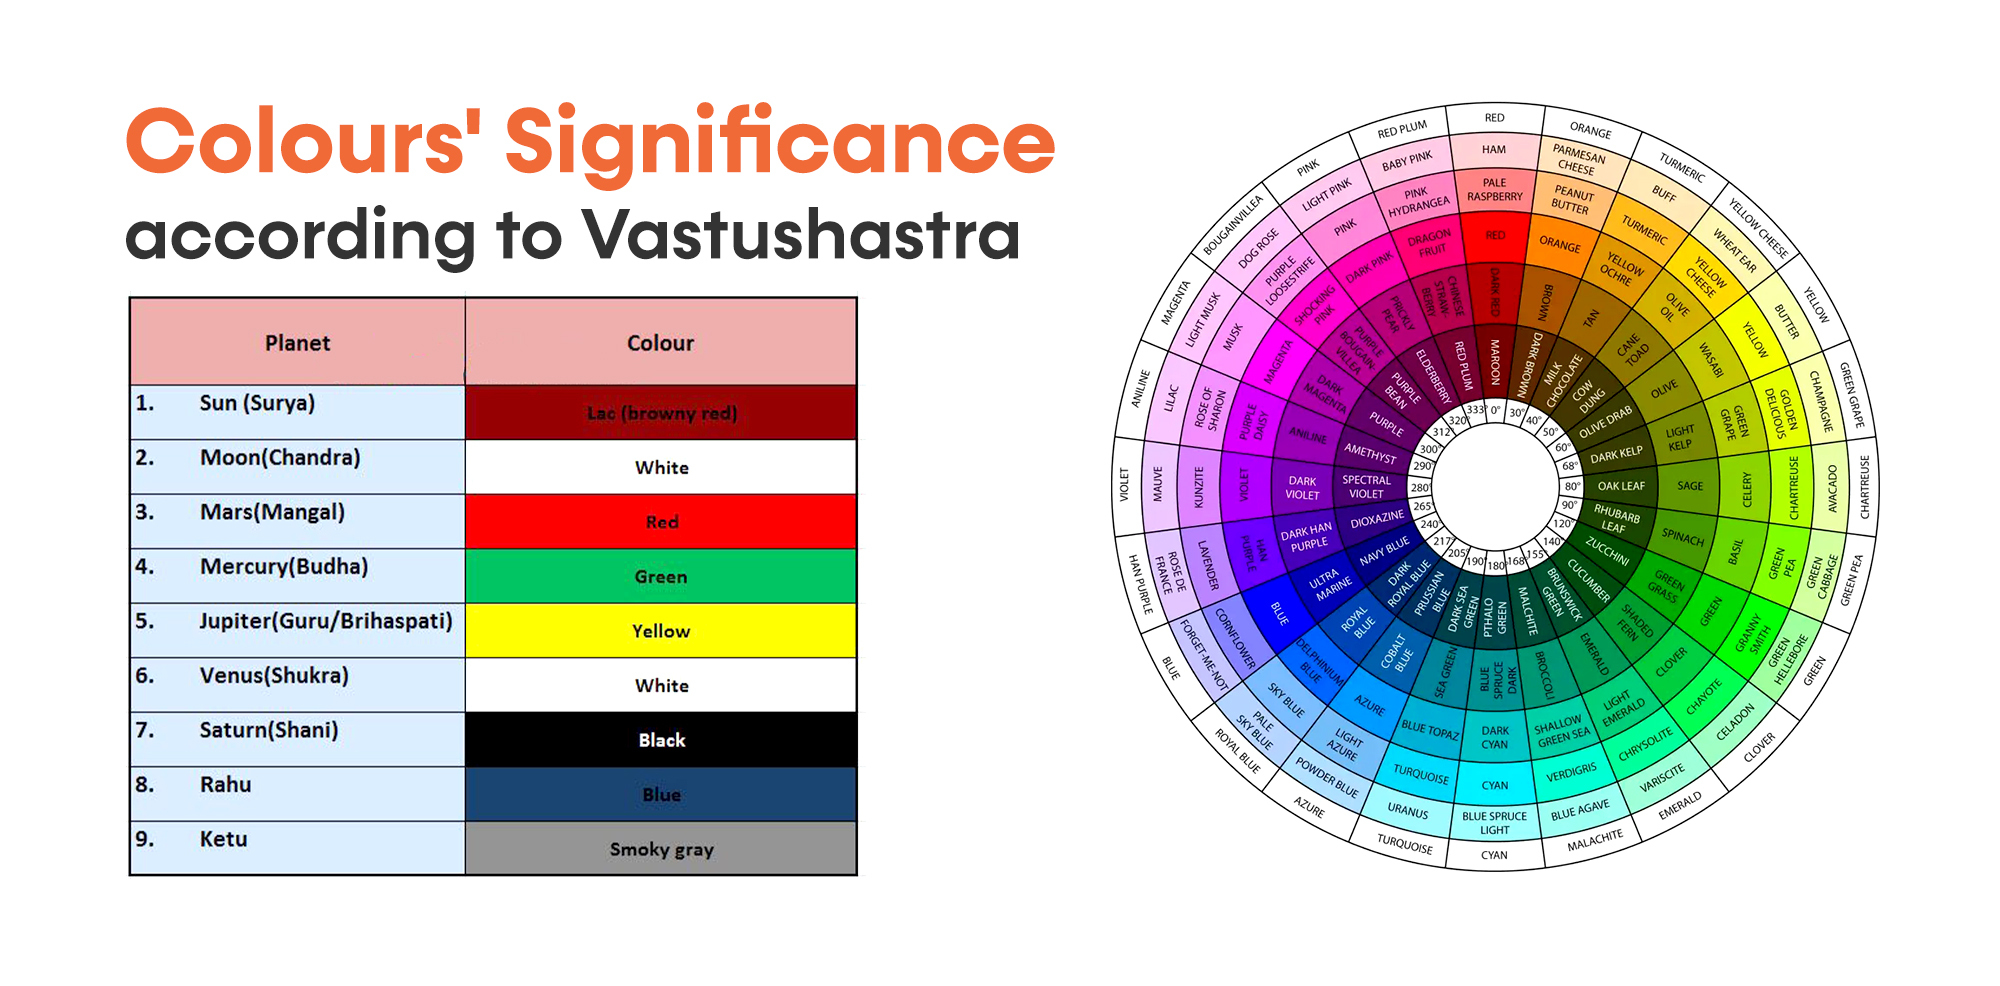 Colours Significance according to Vastushastra